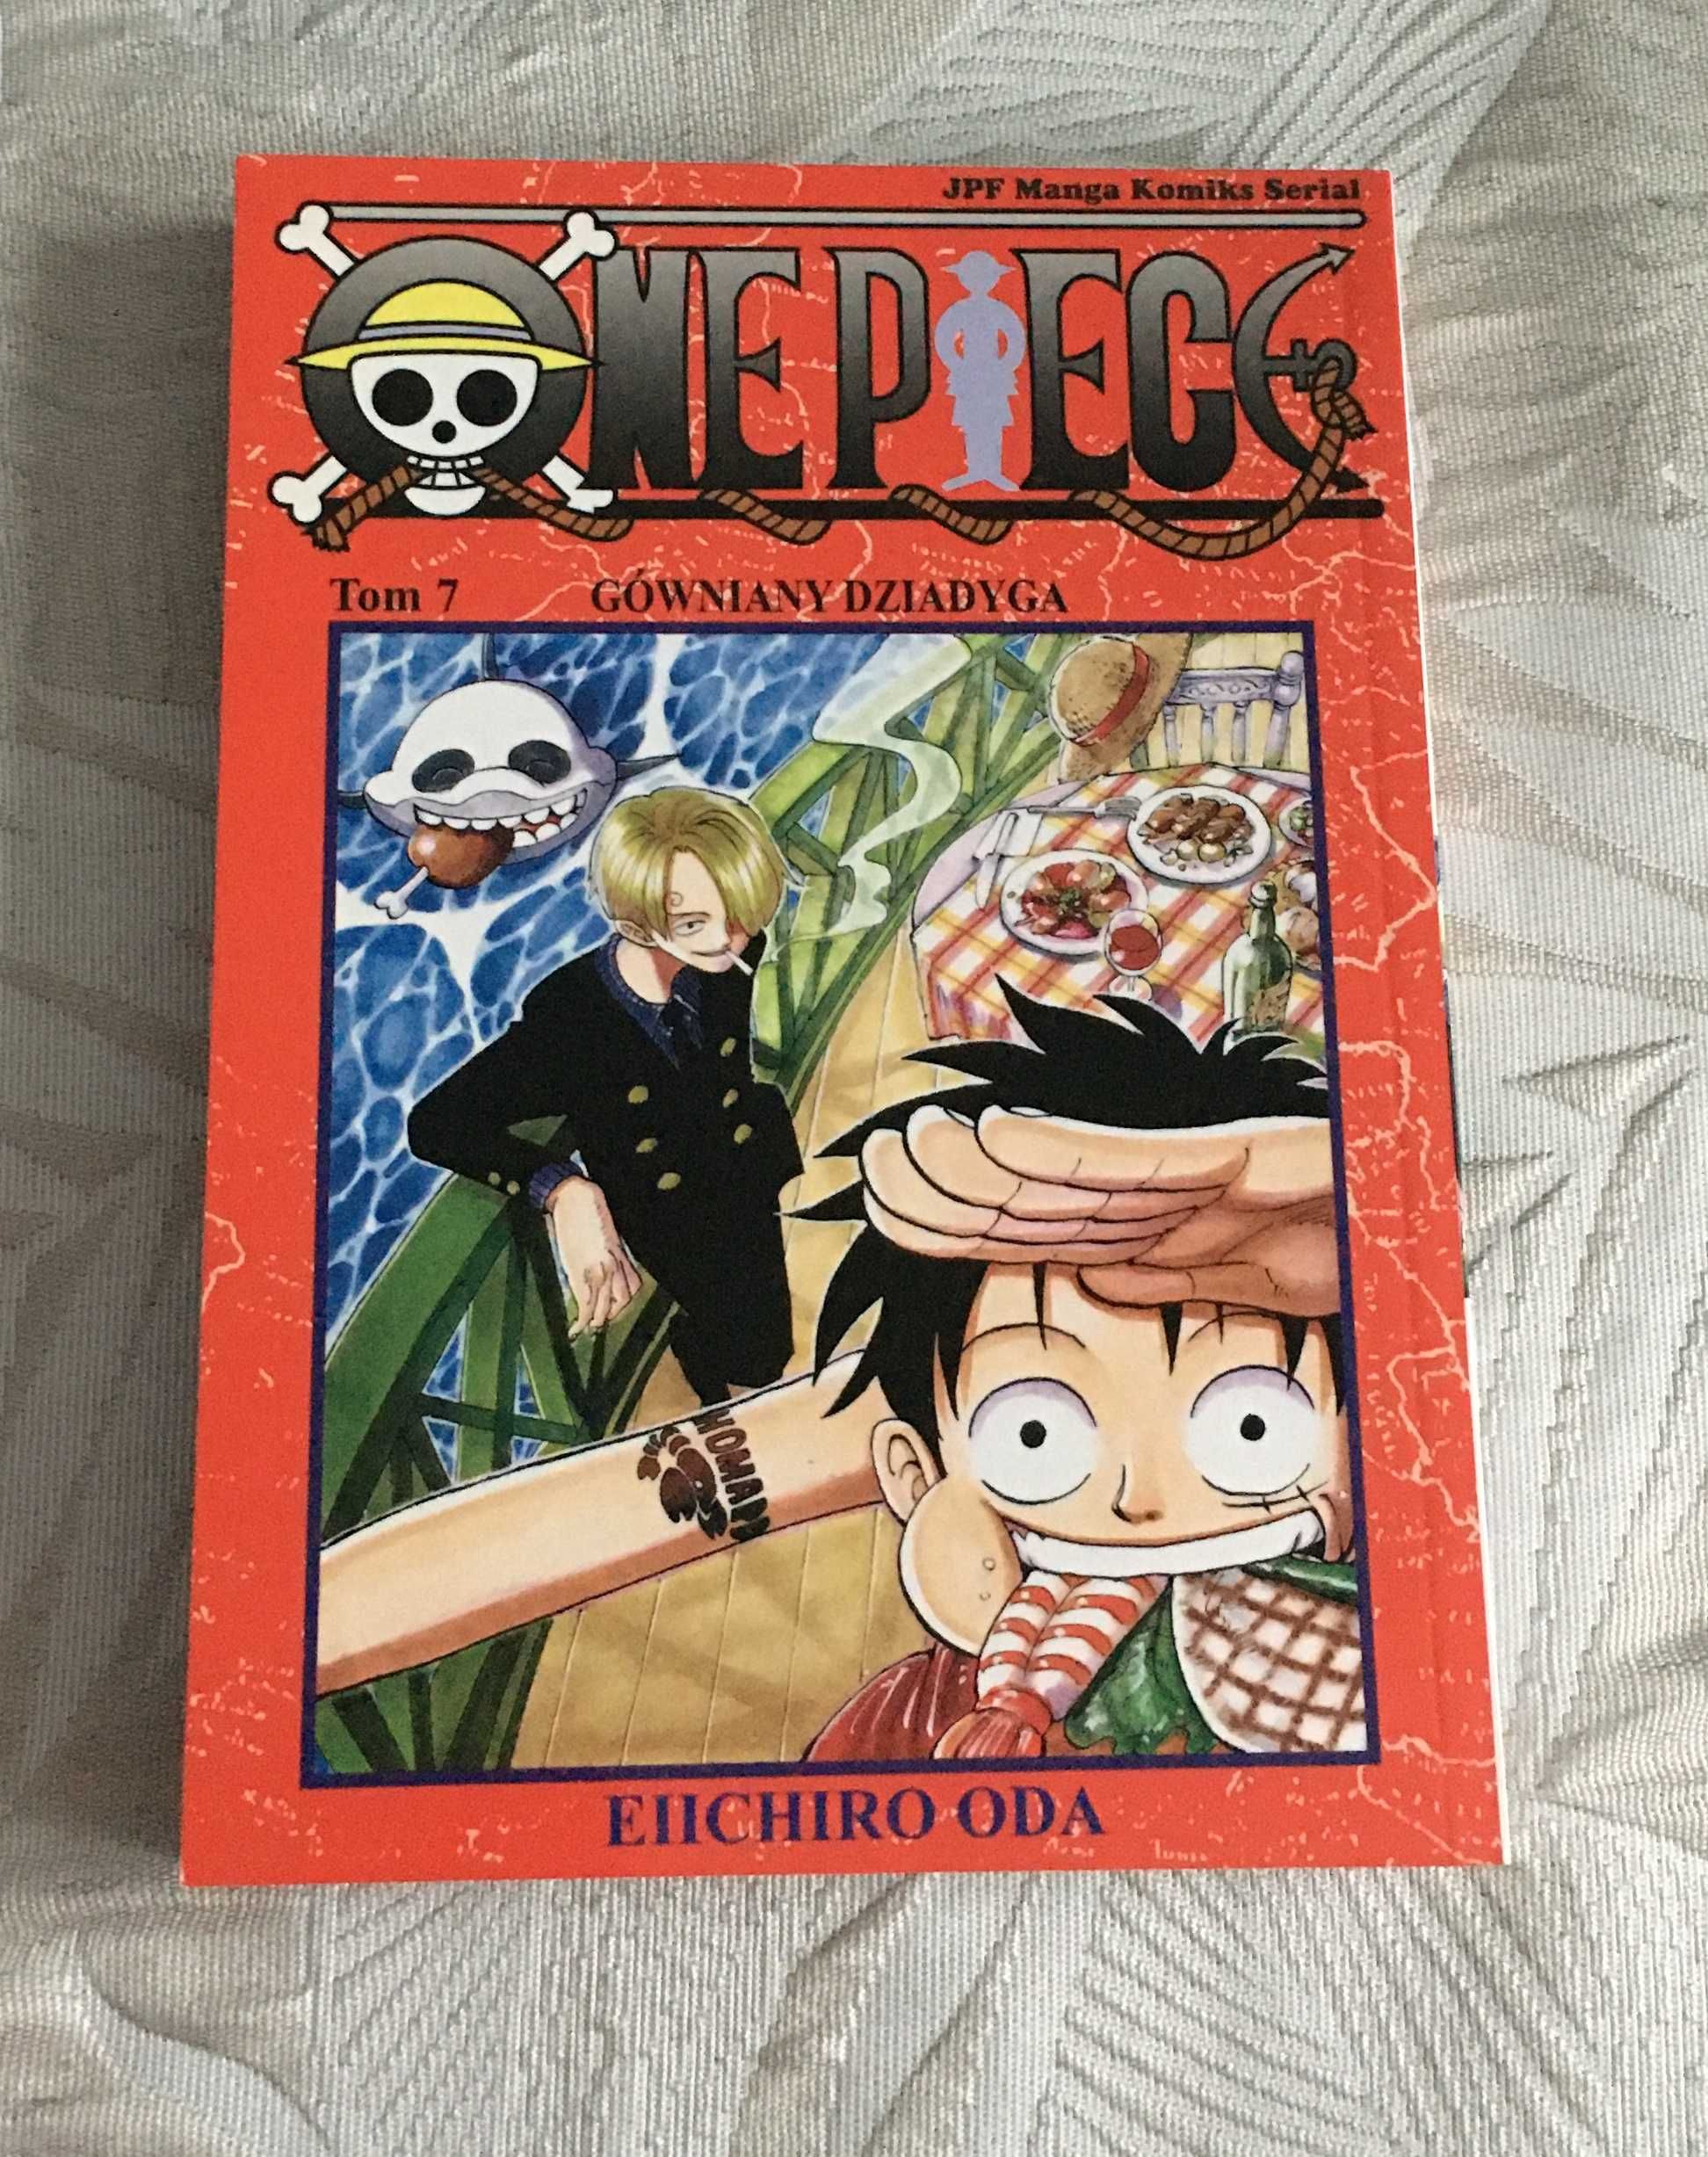 Eiichiro Oda - One Piece Tom 7. (Manga)